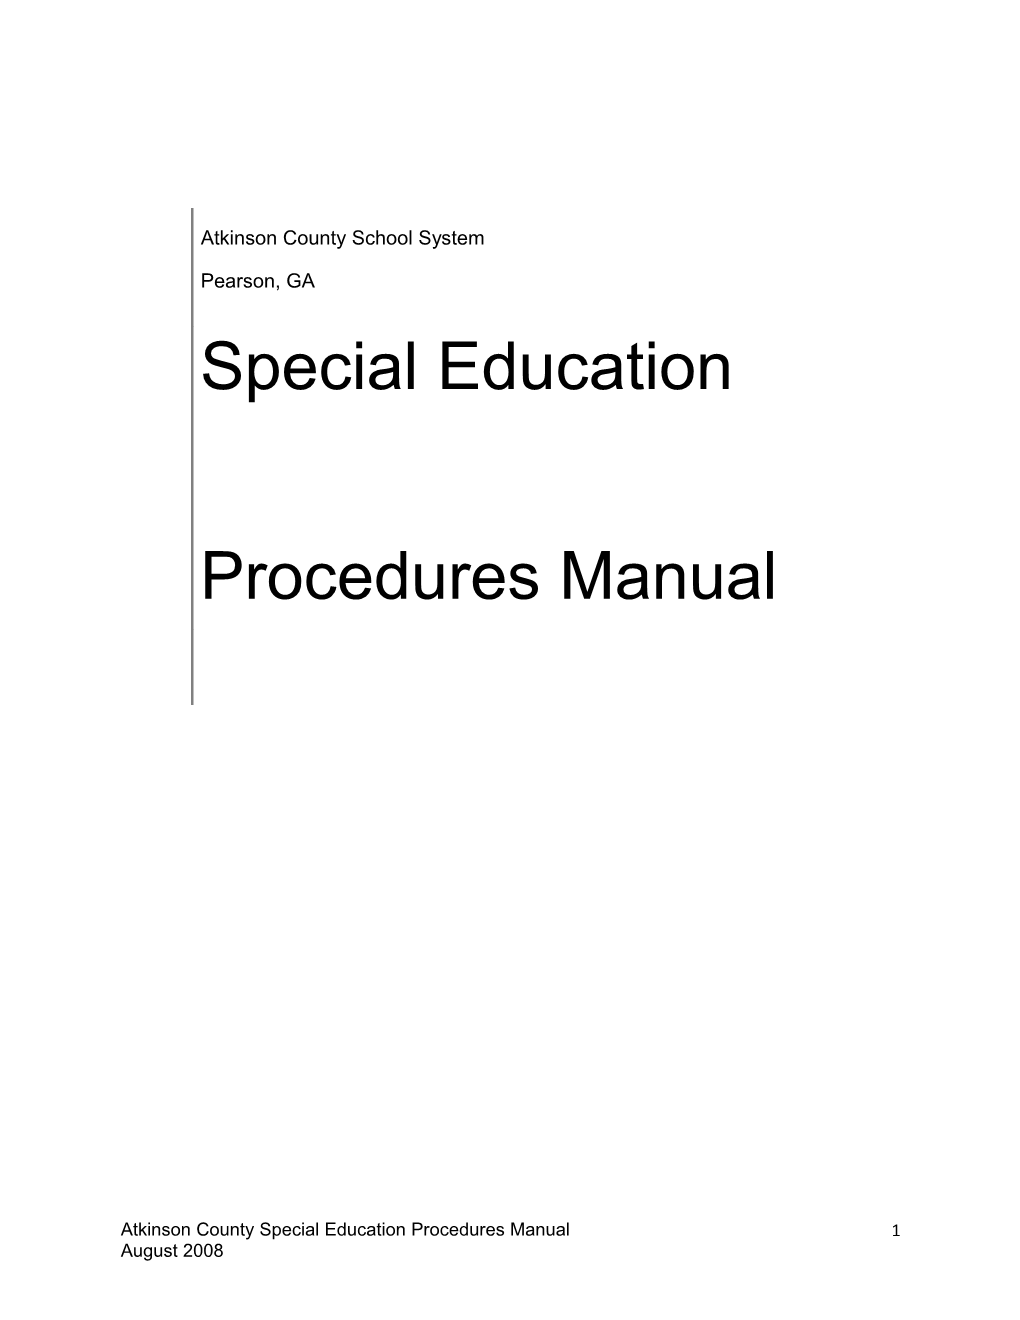 Special Education Procedures Manual